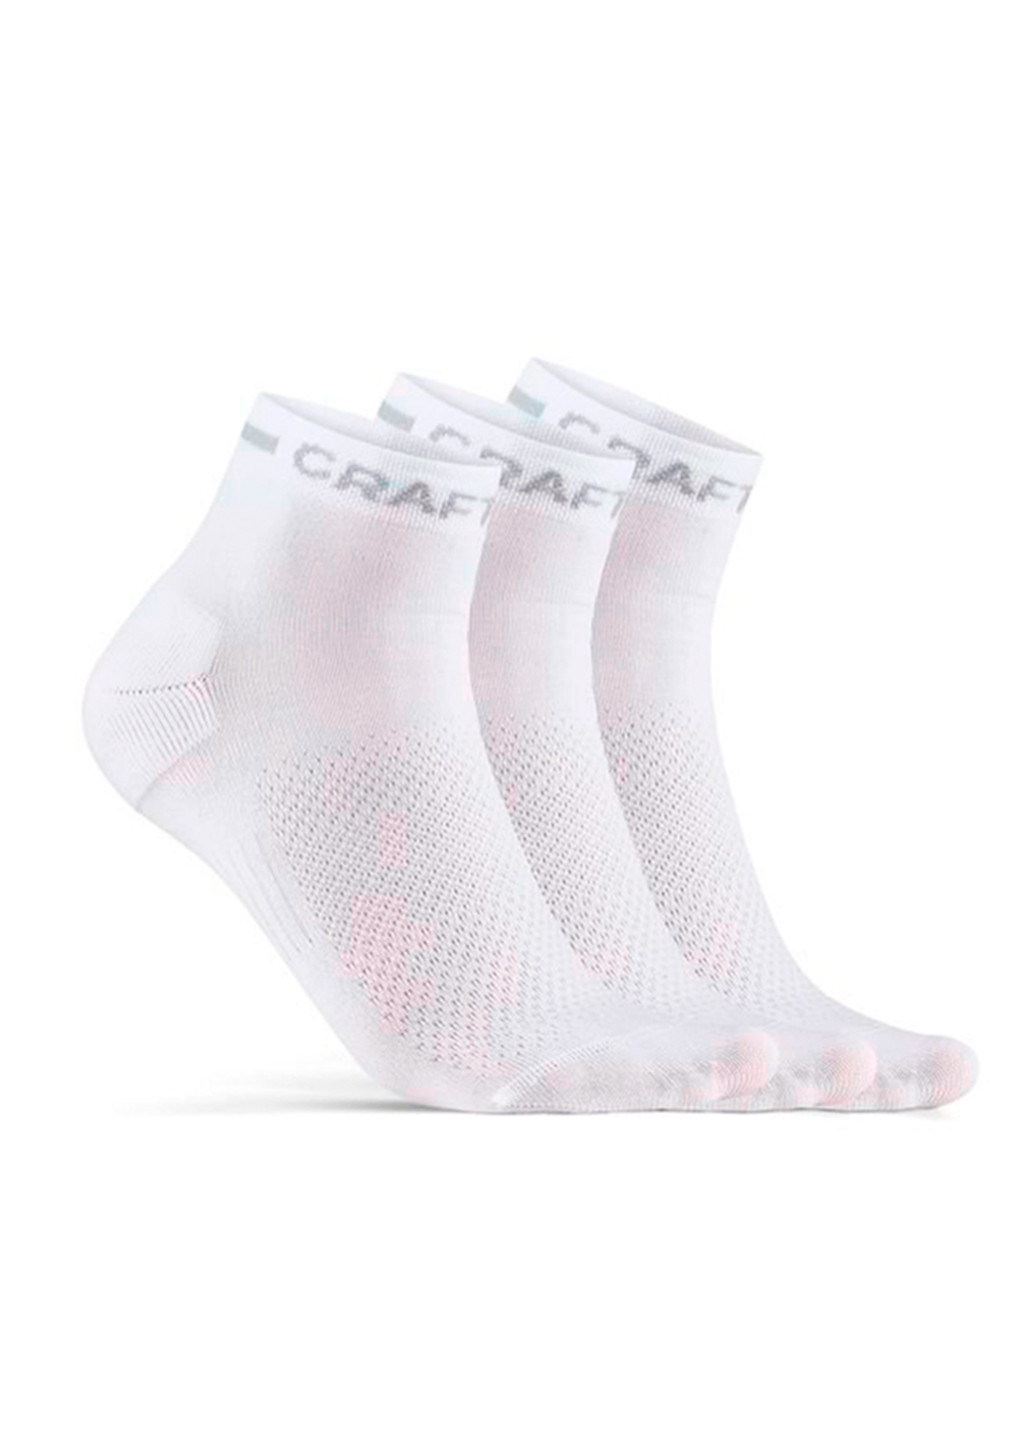 Мужские носки Craft core dry mid (3 пары) (258402403)